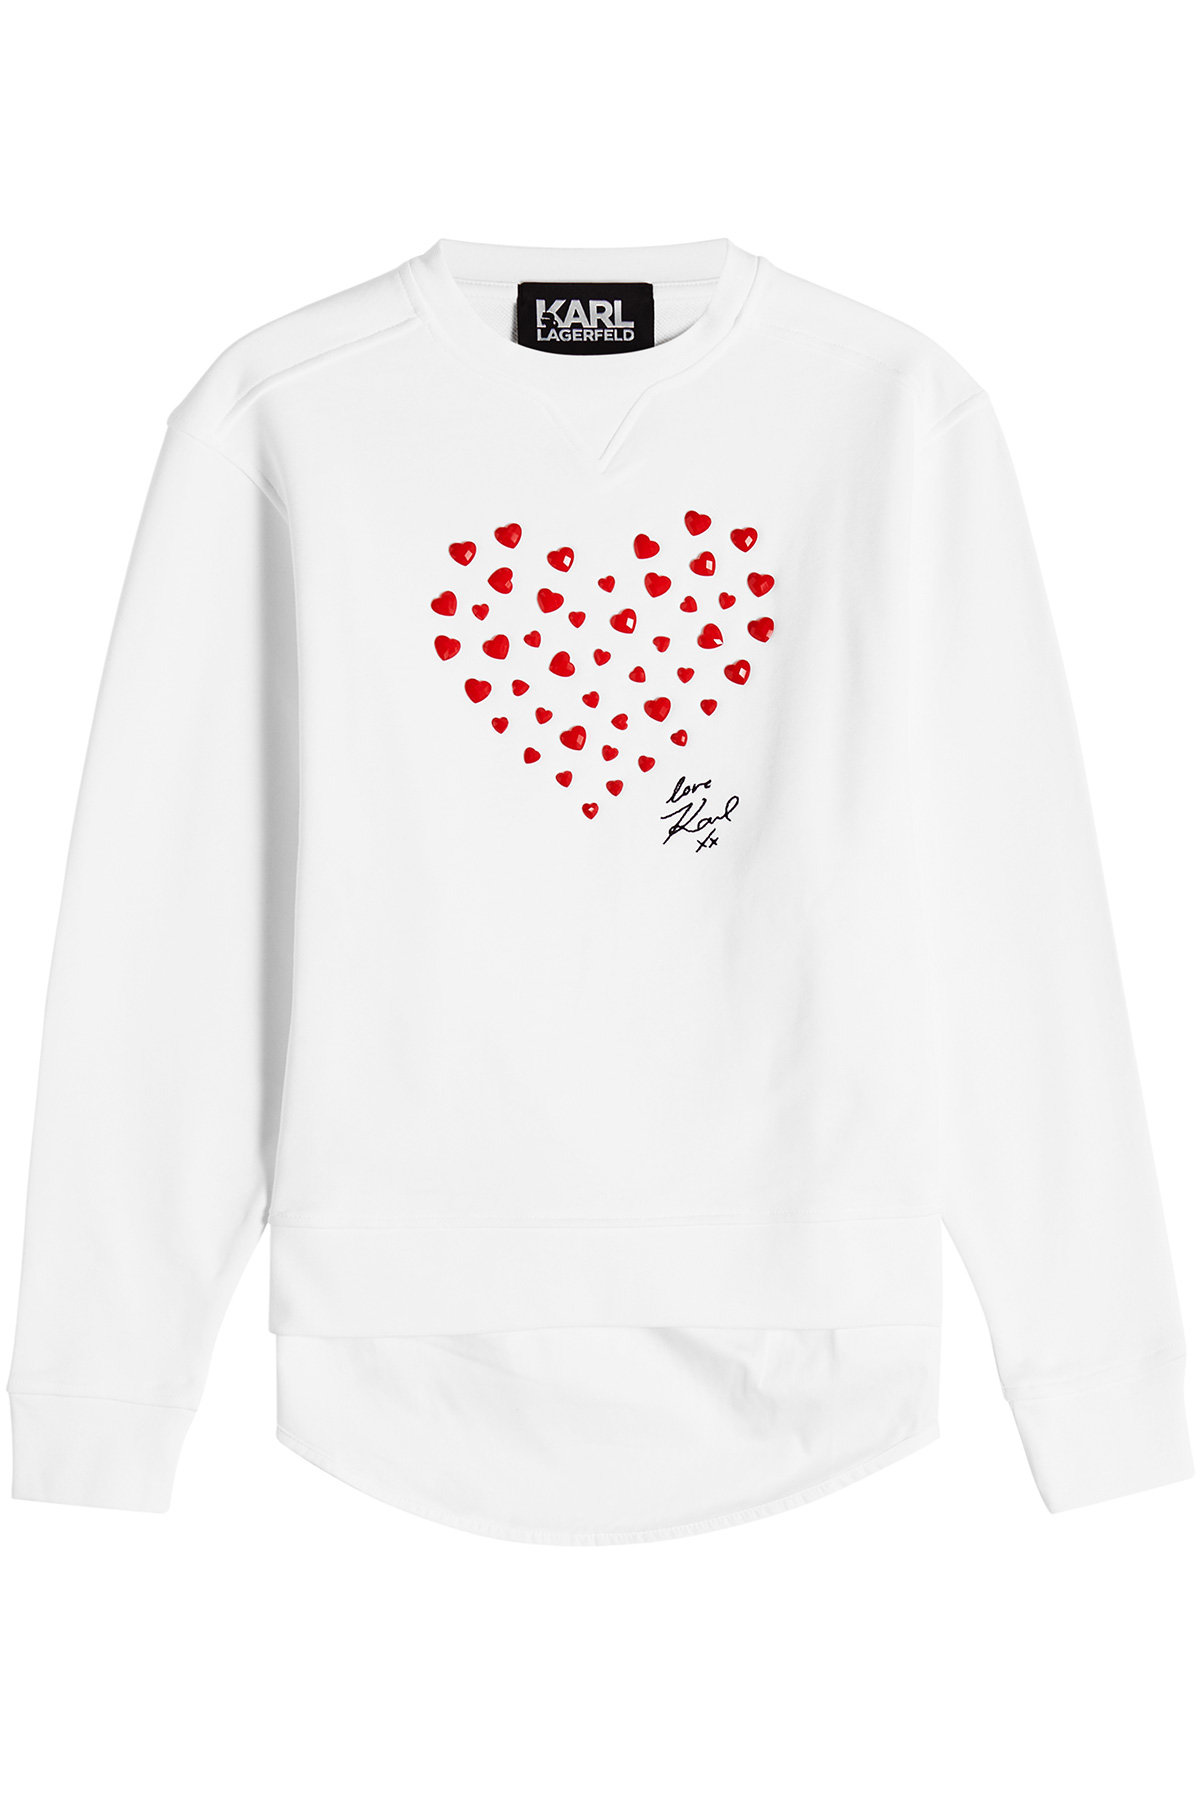 Karl Love Embellished Cotton Sweatshirt by Karl Lagerfeld